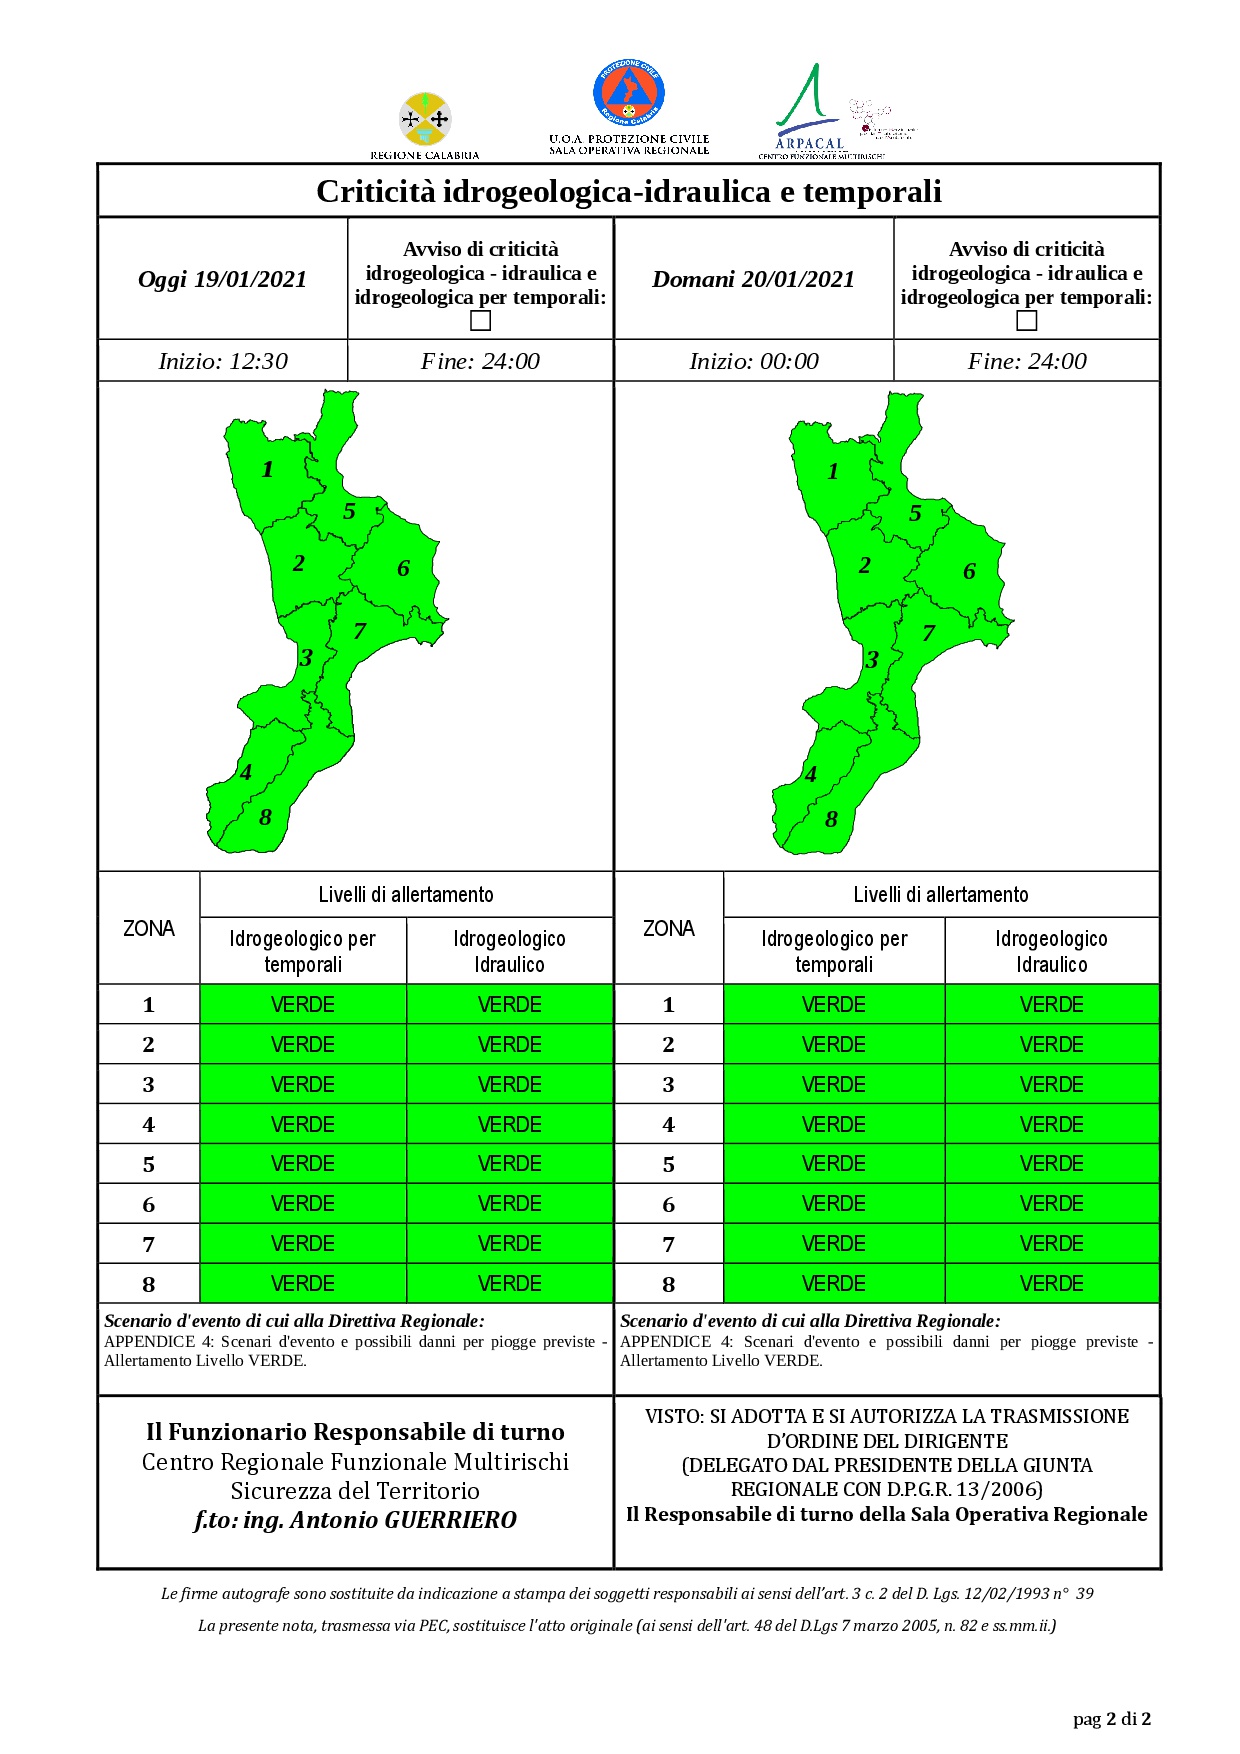 Criticità idrogeologica-idraulica e temporali in Calabria 19-01-2021